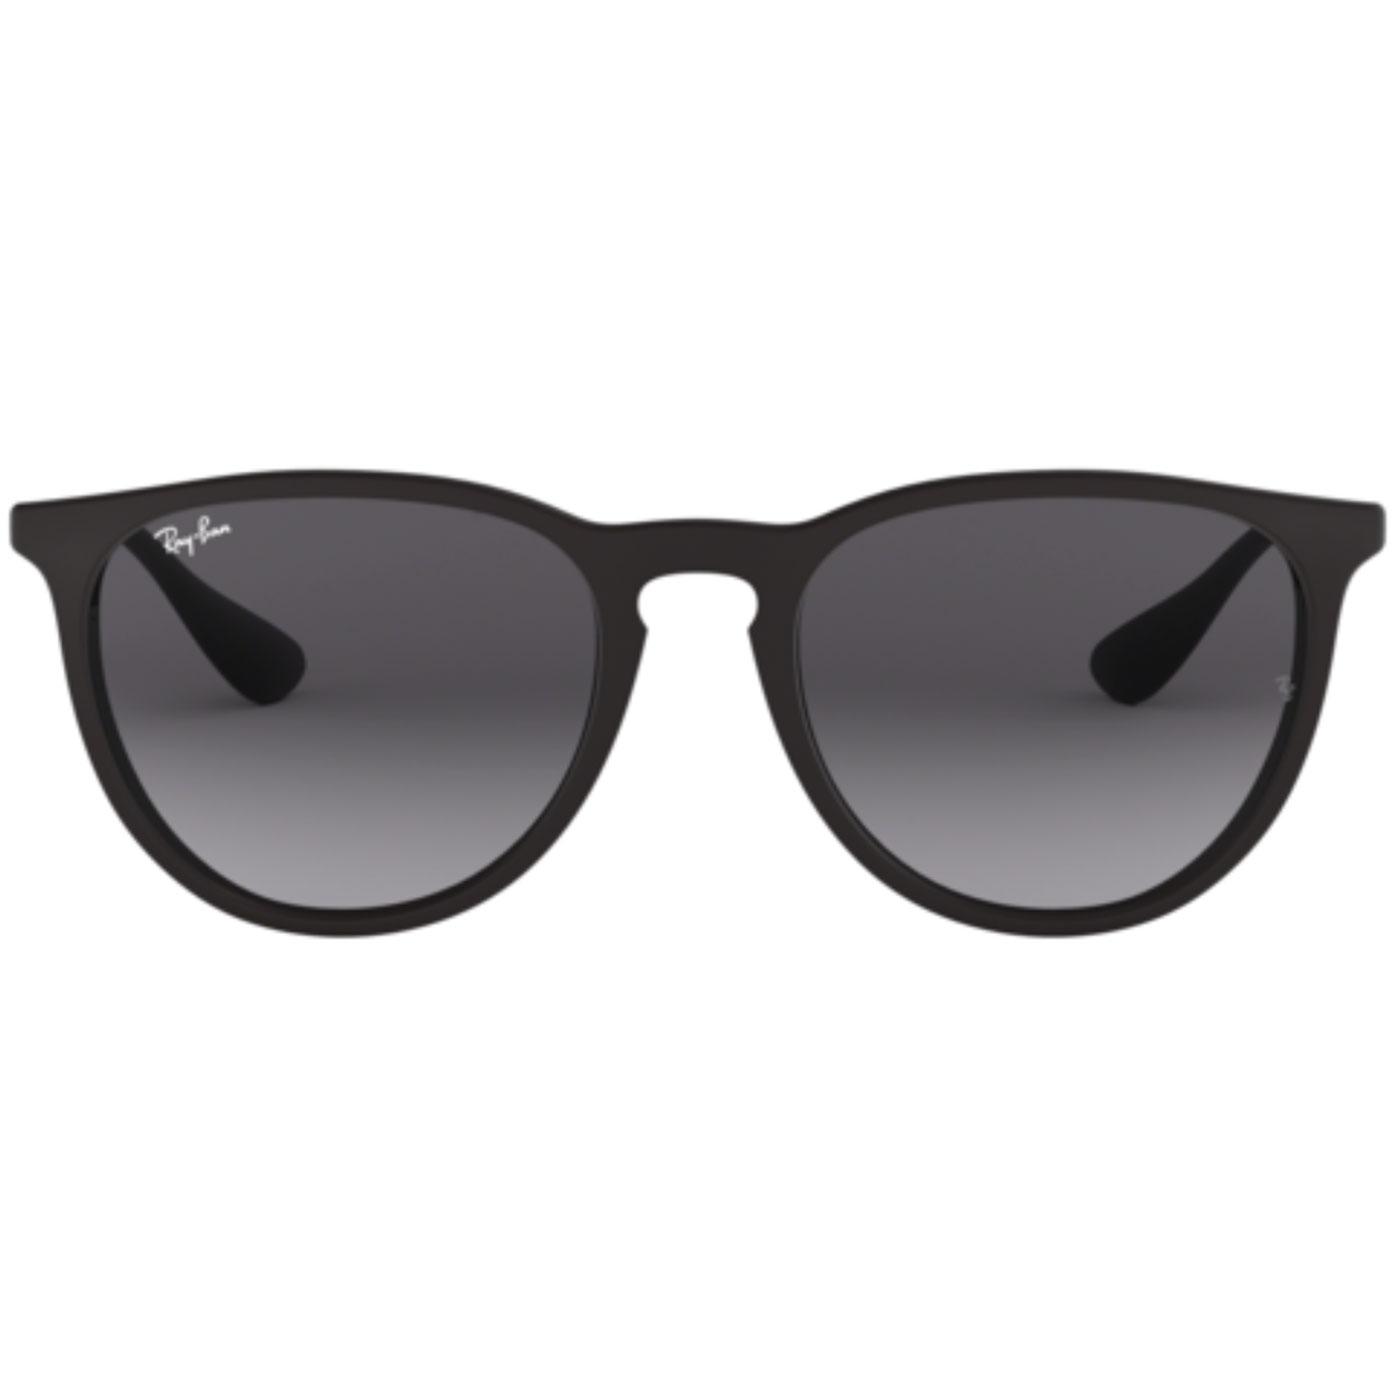 Erika RAY-BAN Retro Mod 60s Wayfarer Sunglasses